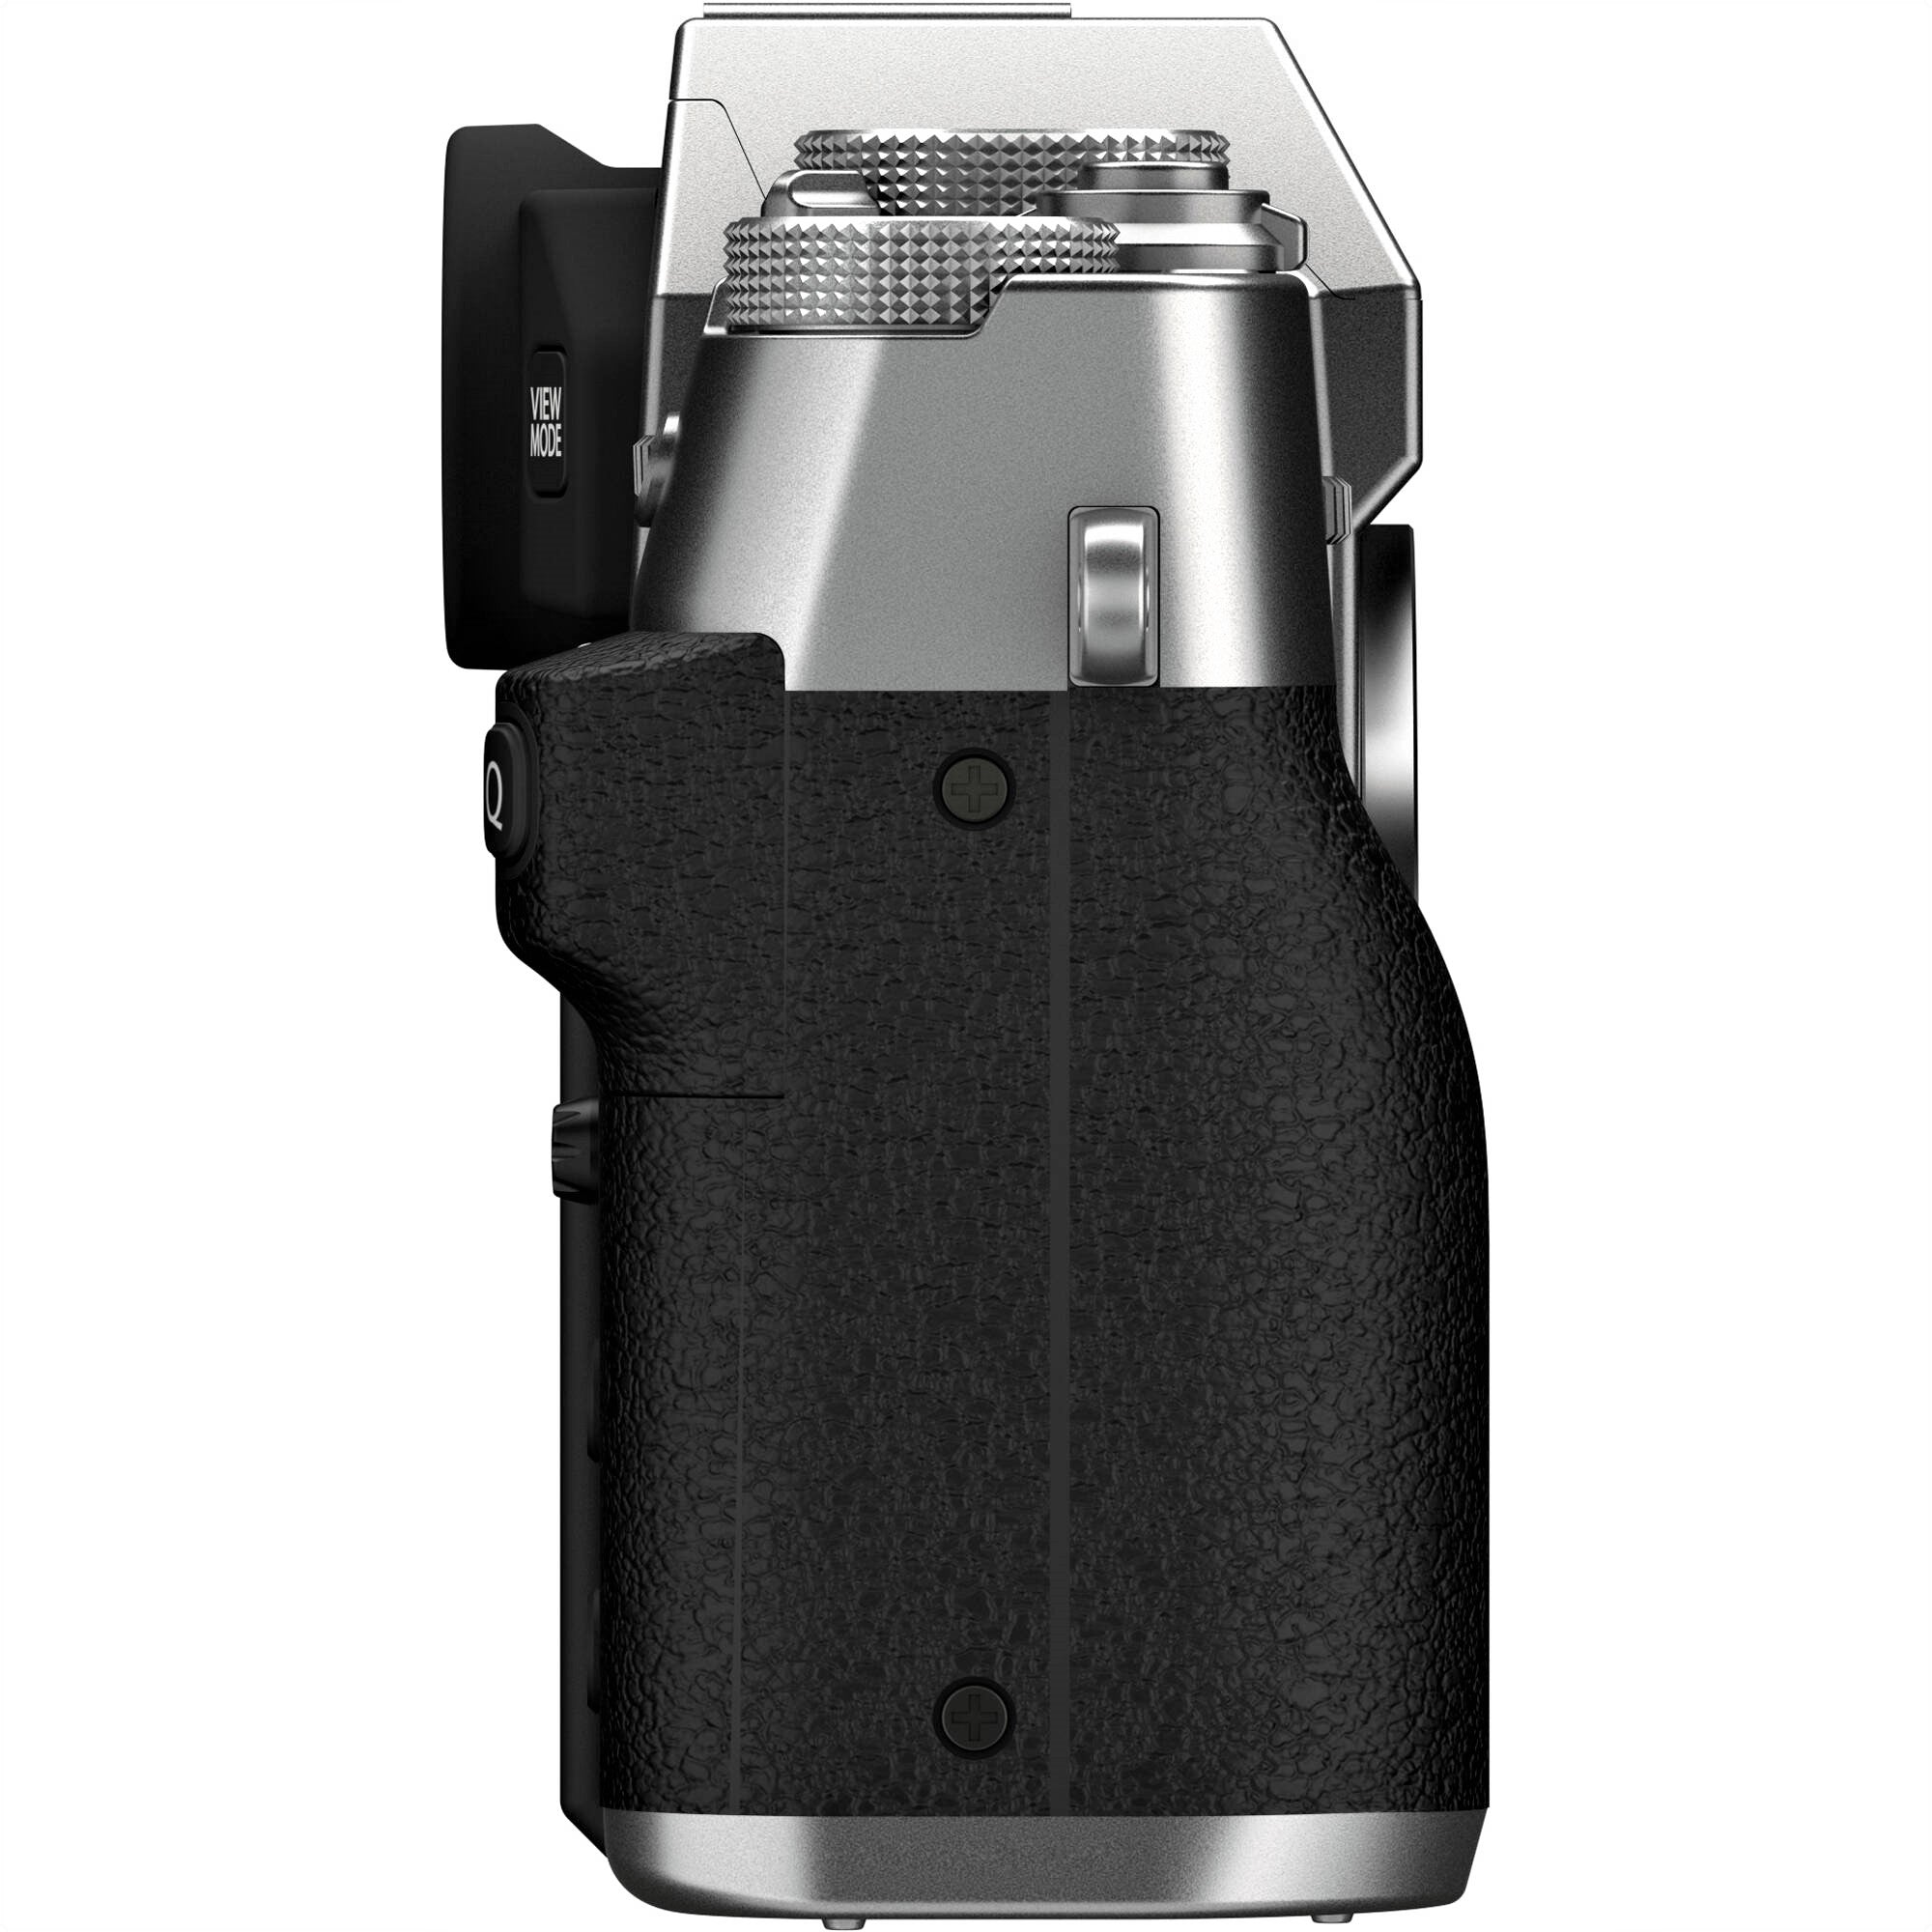 Fujifilm X-T30 II Mirrorless Camera (Silver) - Side View